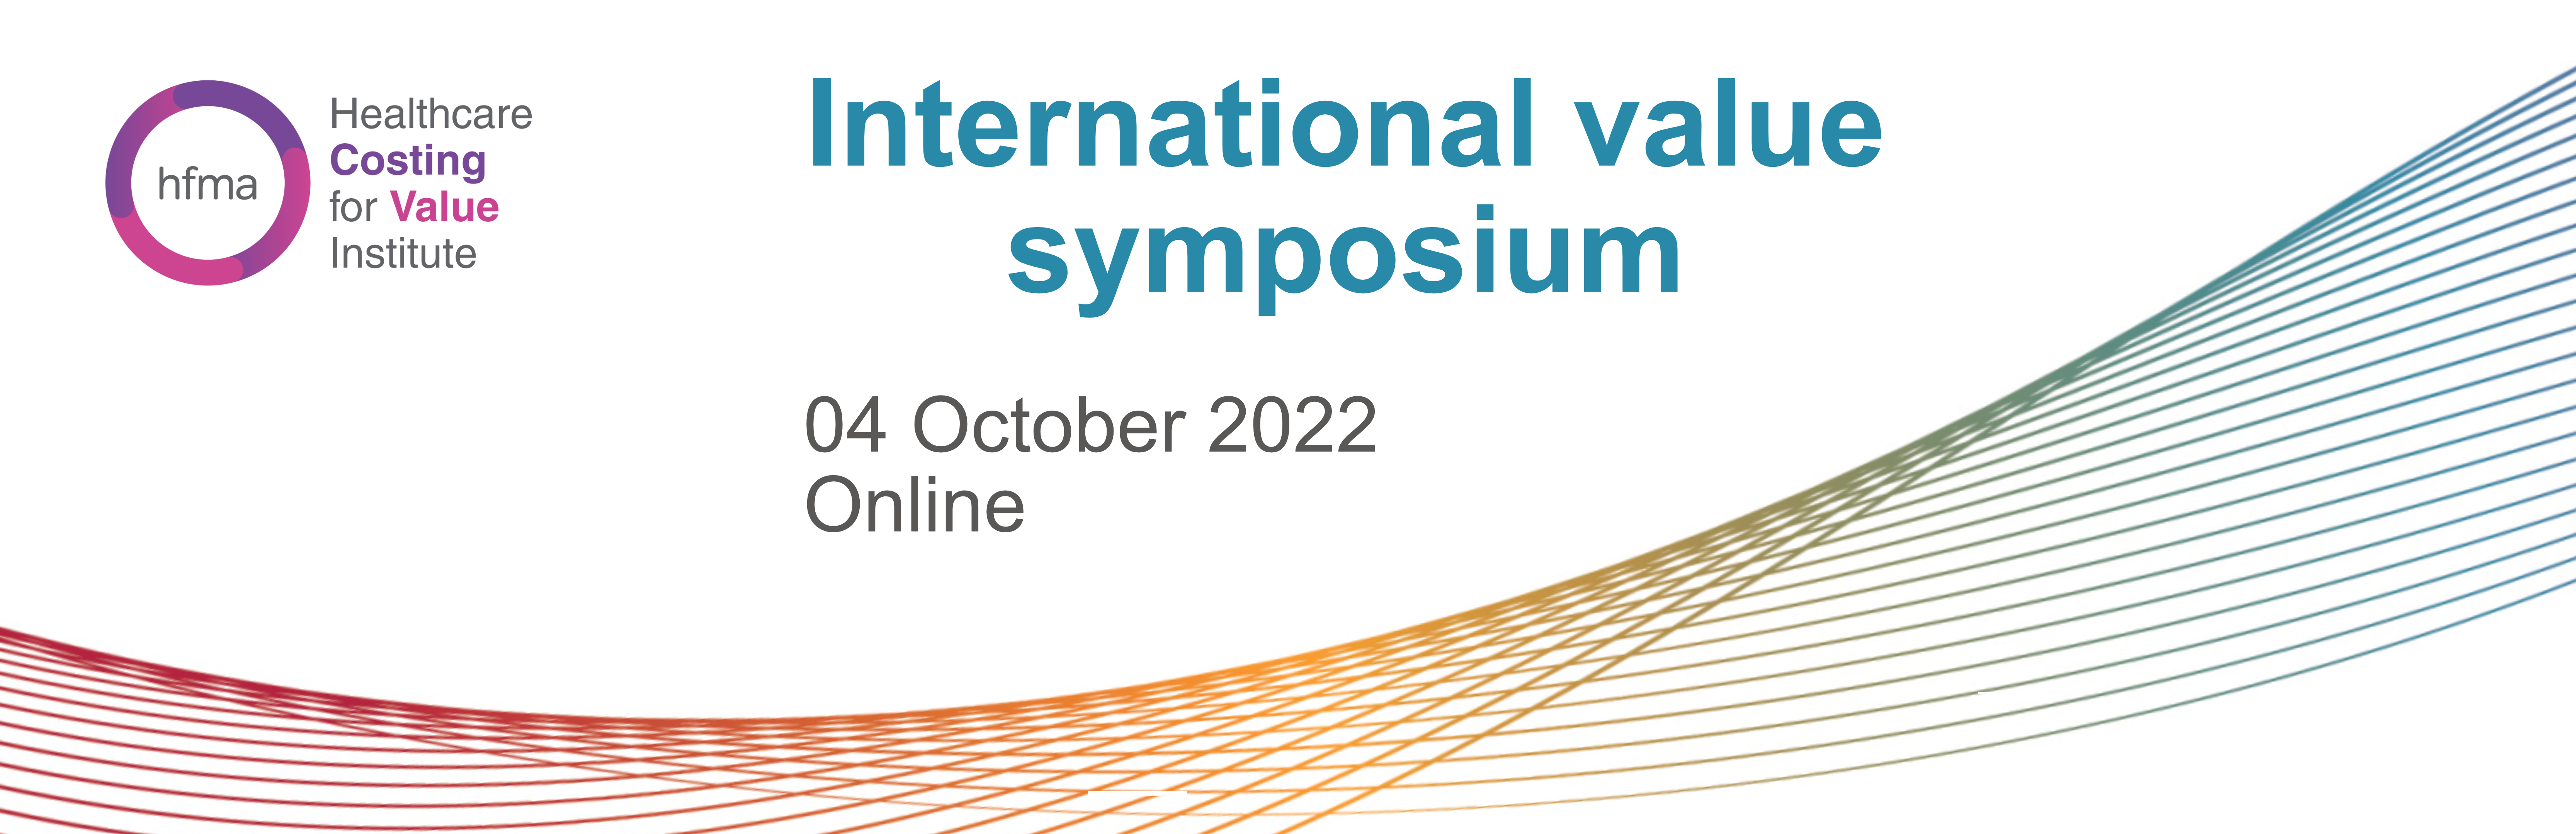 International value symposium 2022